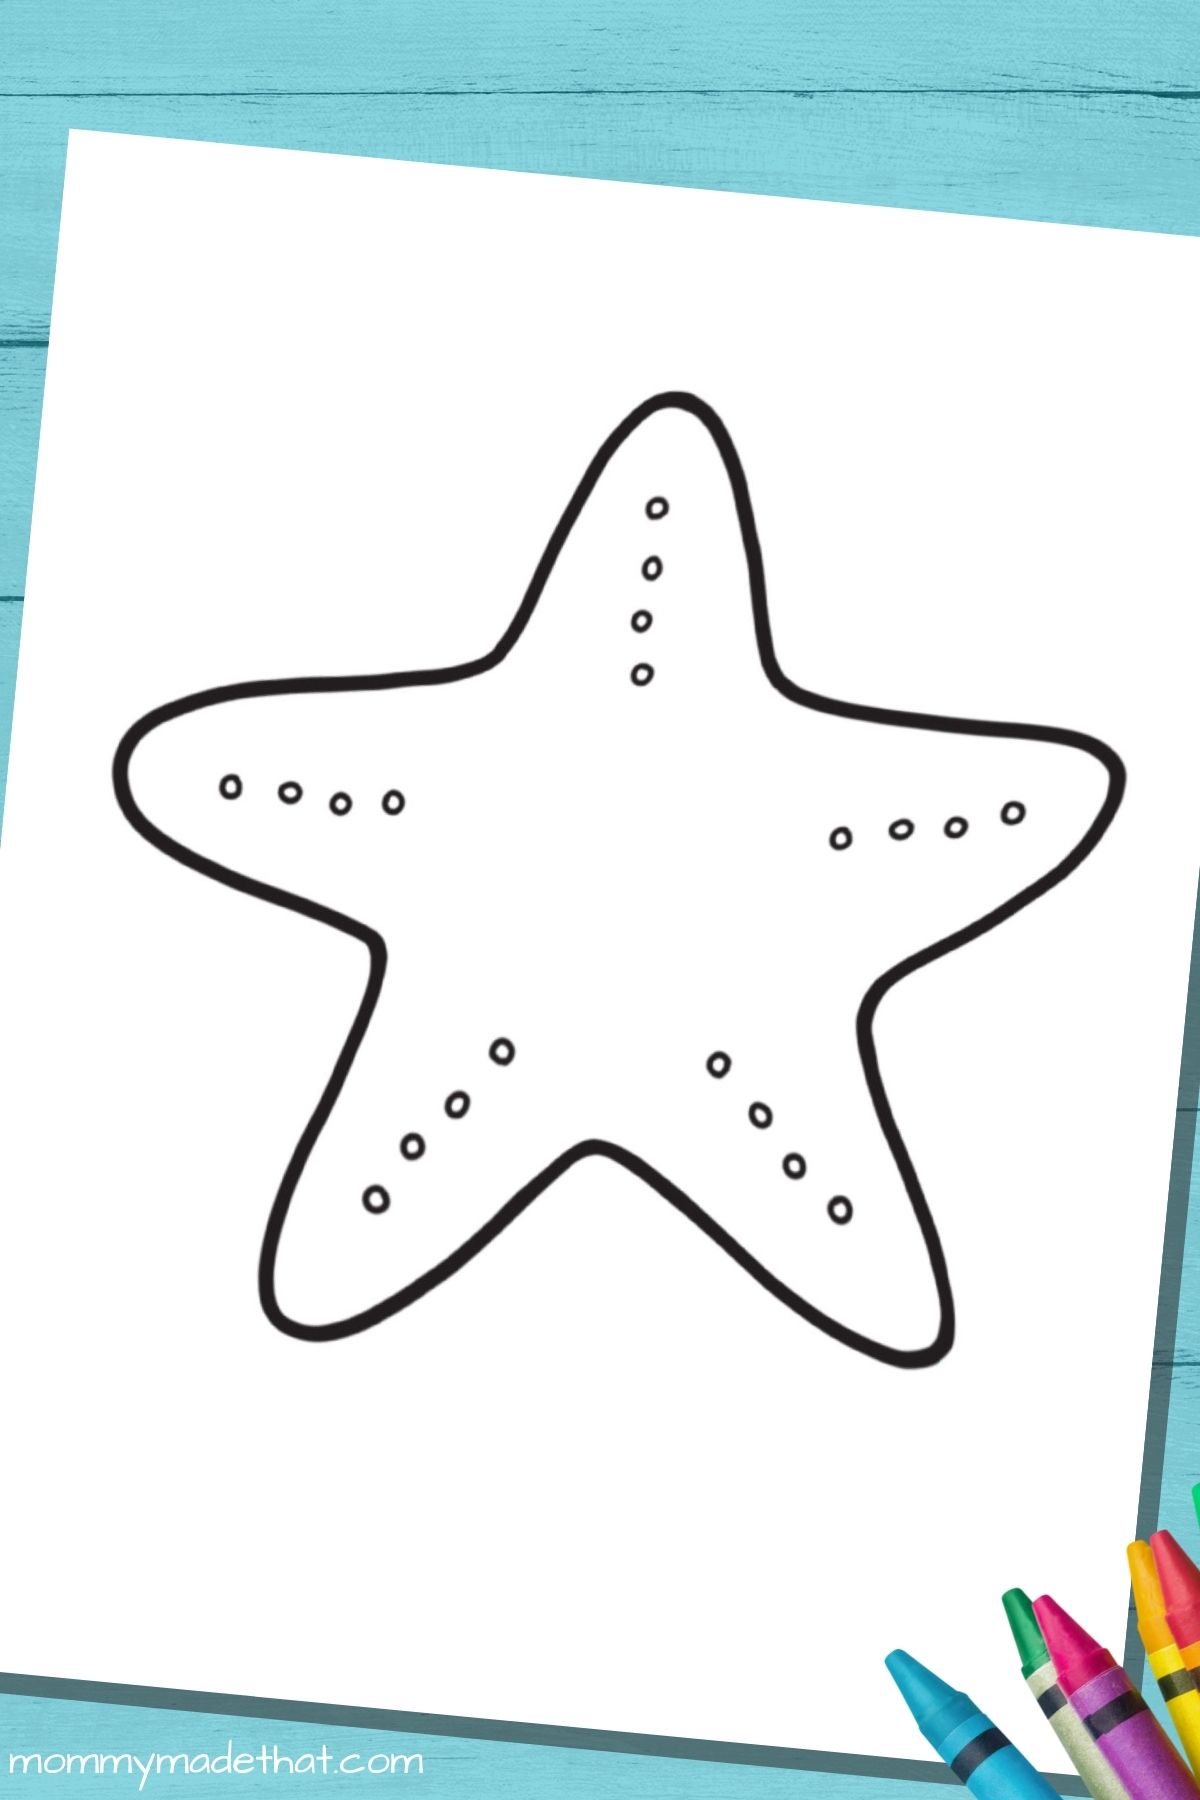 Starfish outline